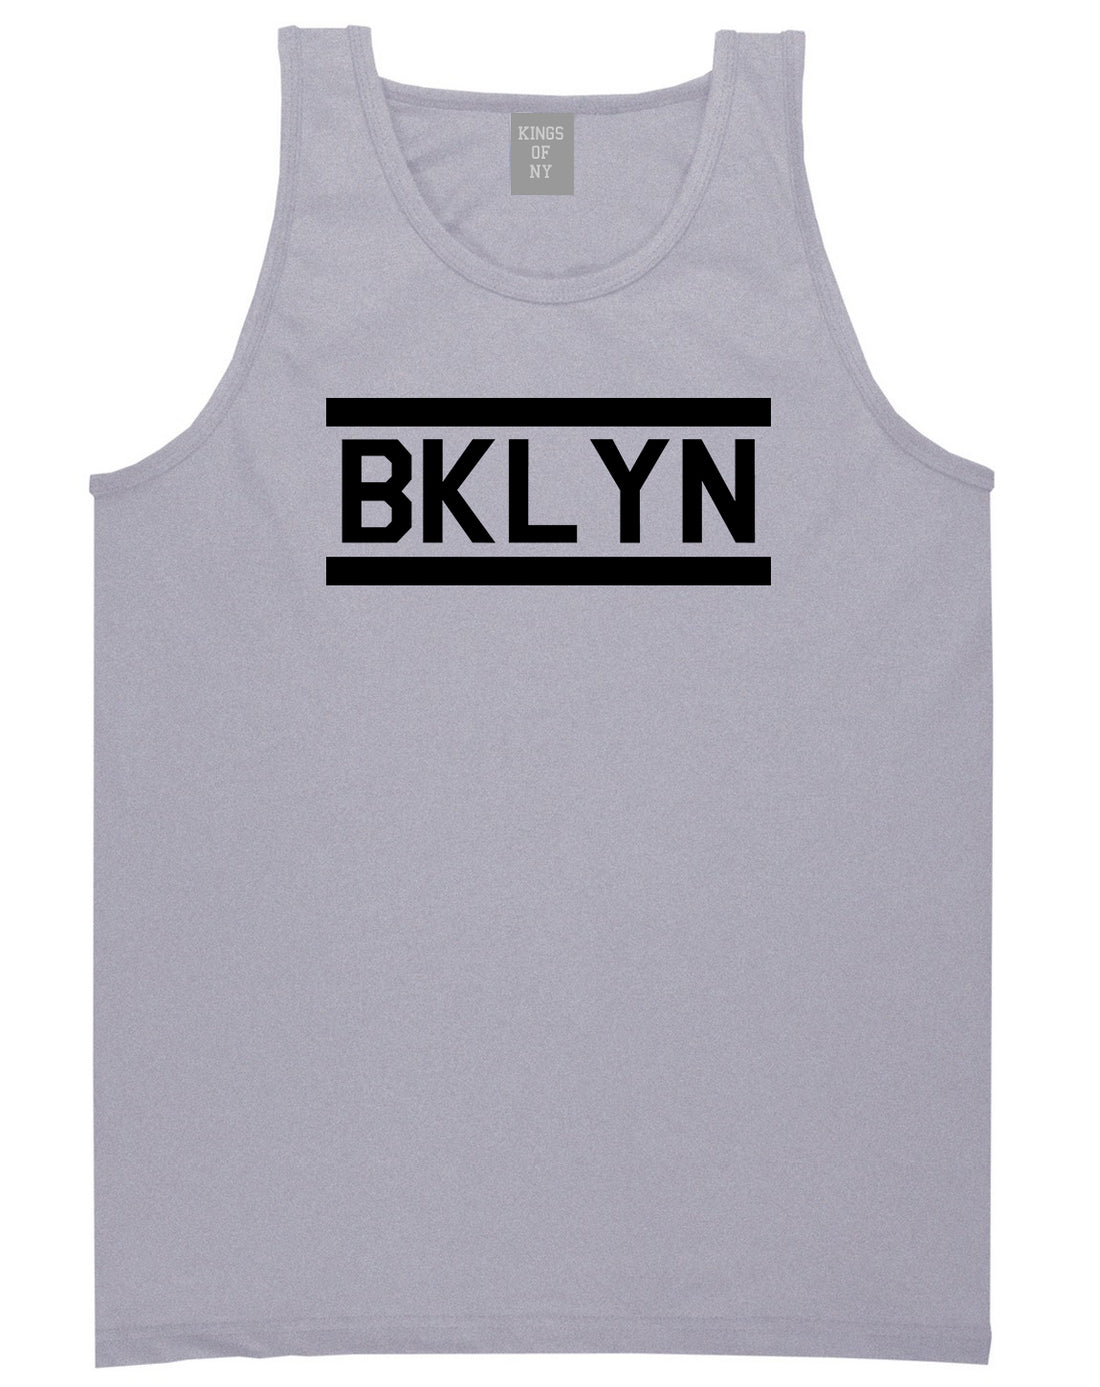 BKLYN Brooklyn Mens Tank Top Shirt Grey by Kings Of NY